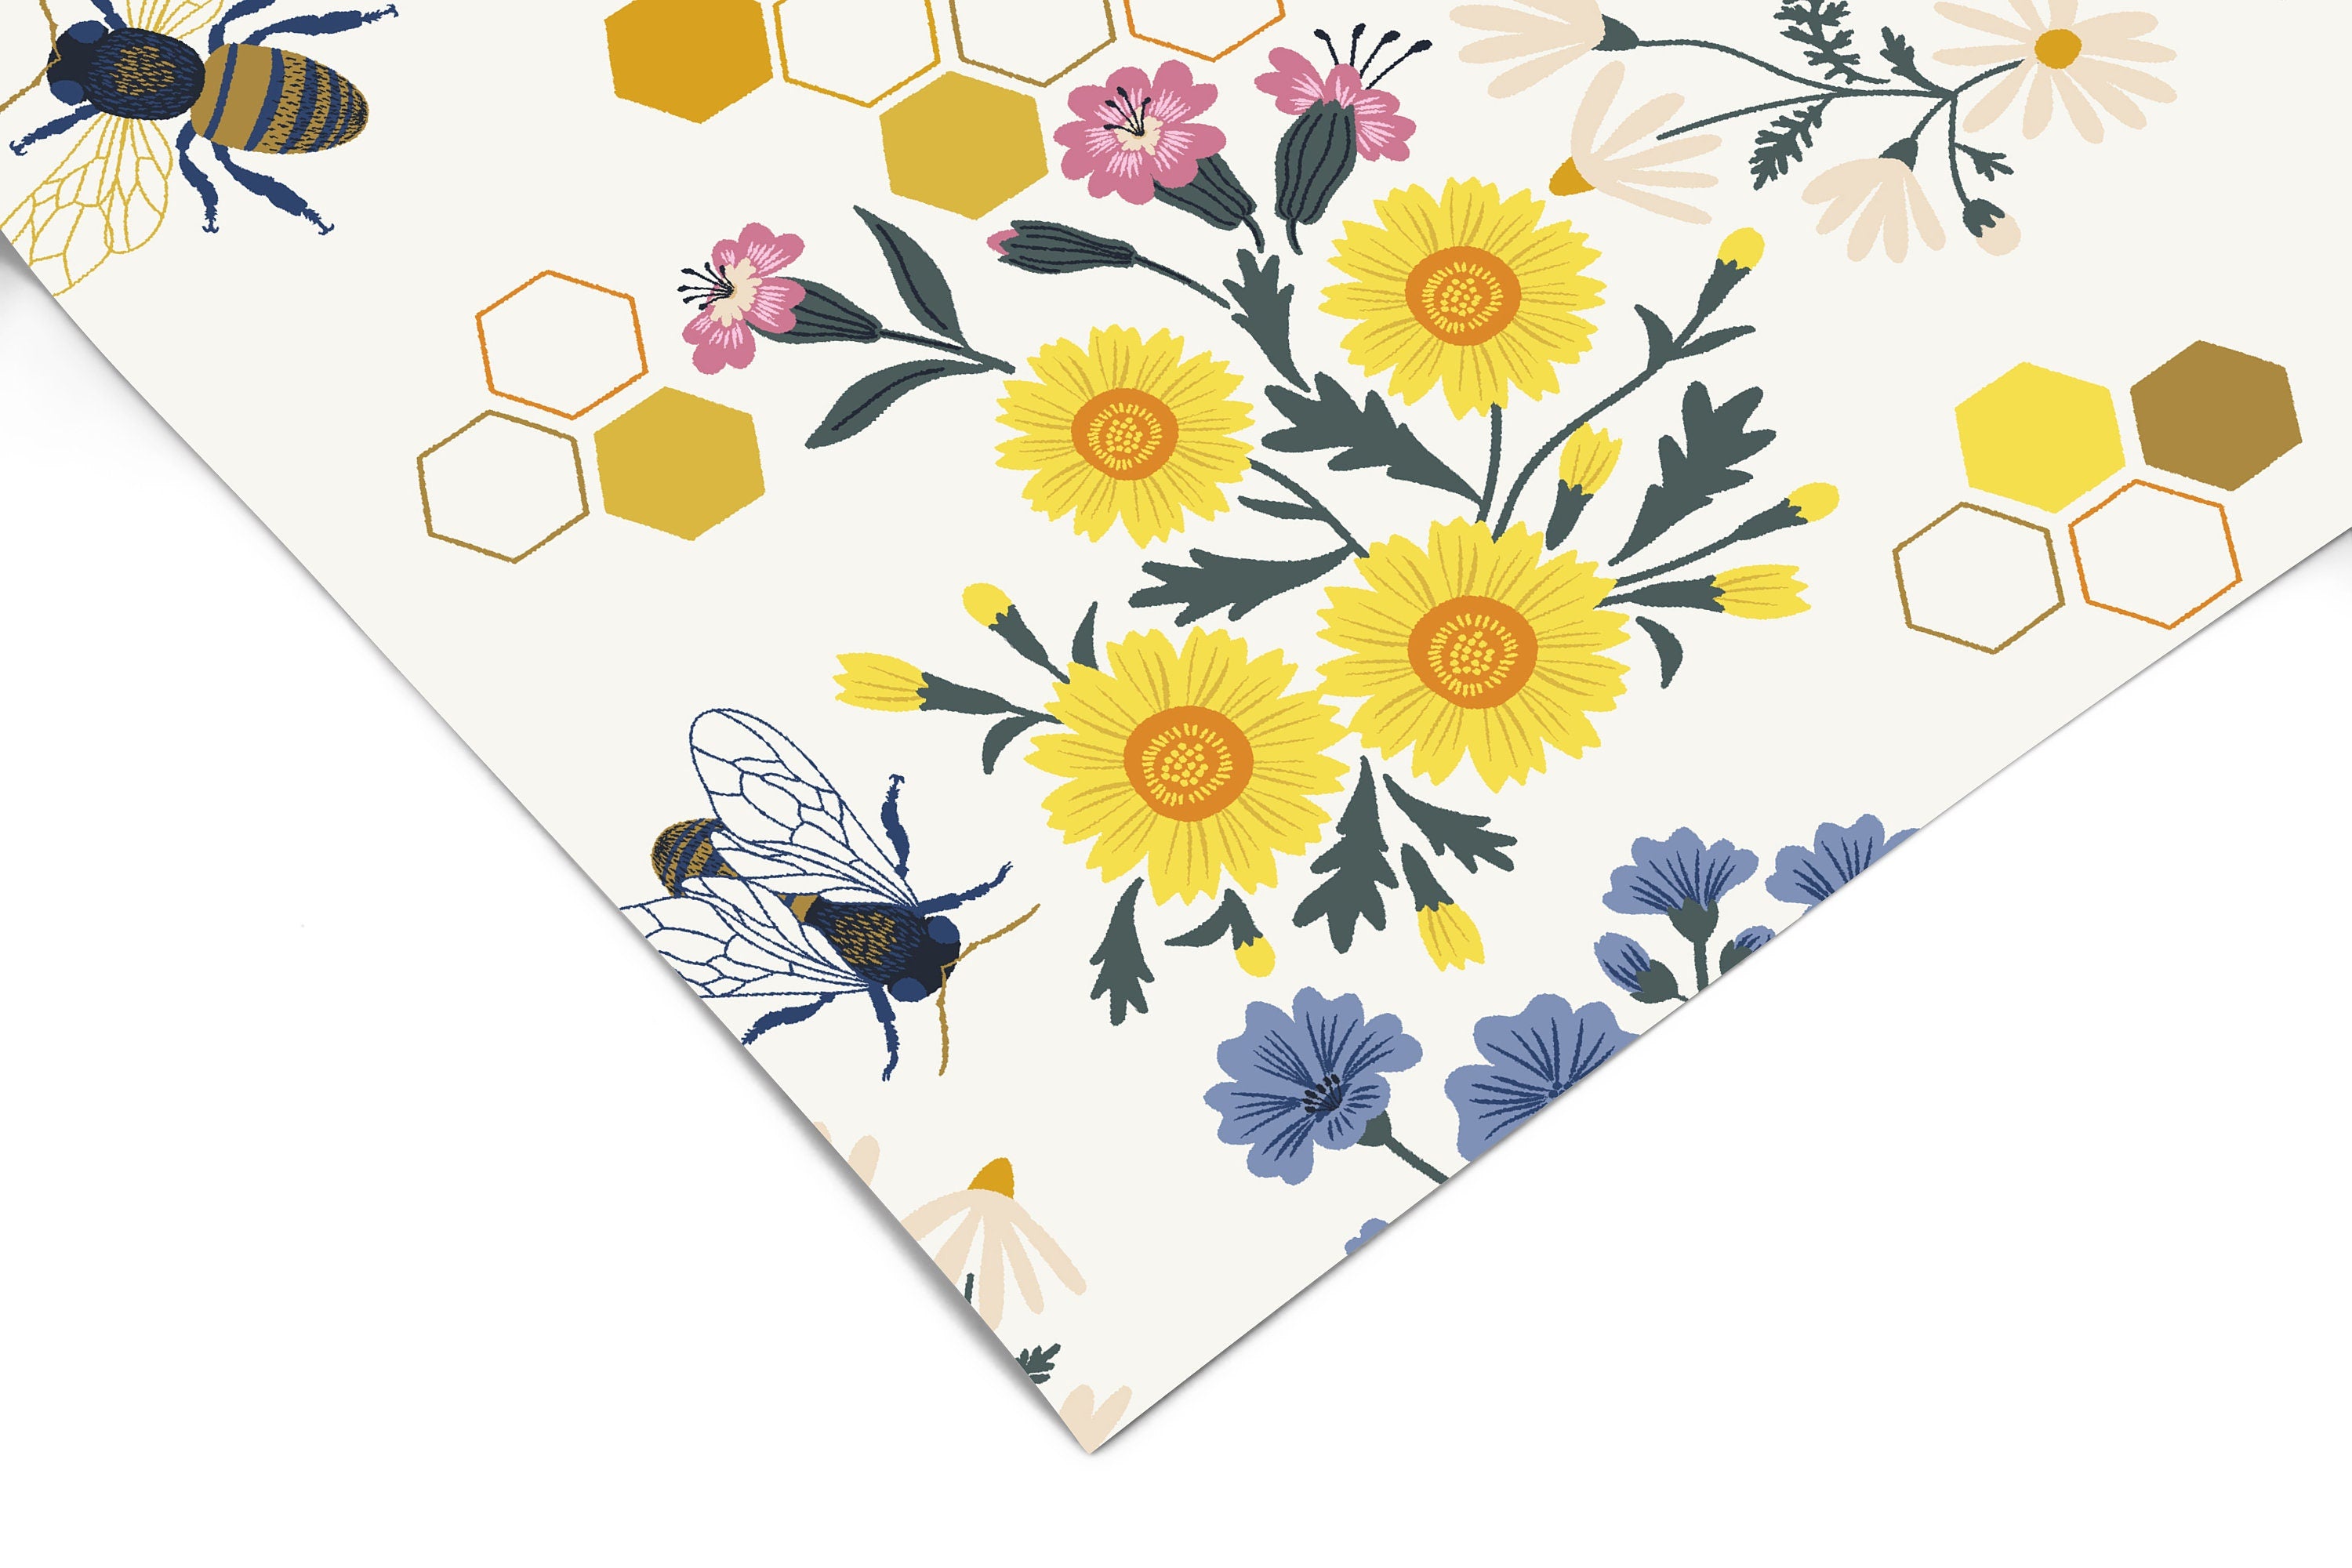 Honeybee Floral Wallpaper | Girls Nursery Wallpaper | Kids Wallpaper | Childrens Wallpaper | Peel Stick Removable Wallpaper | 363